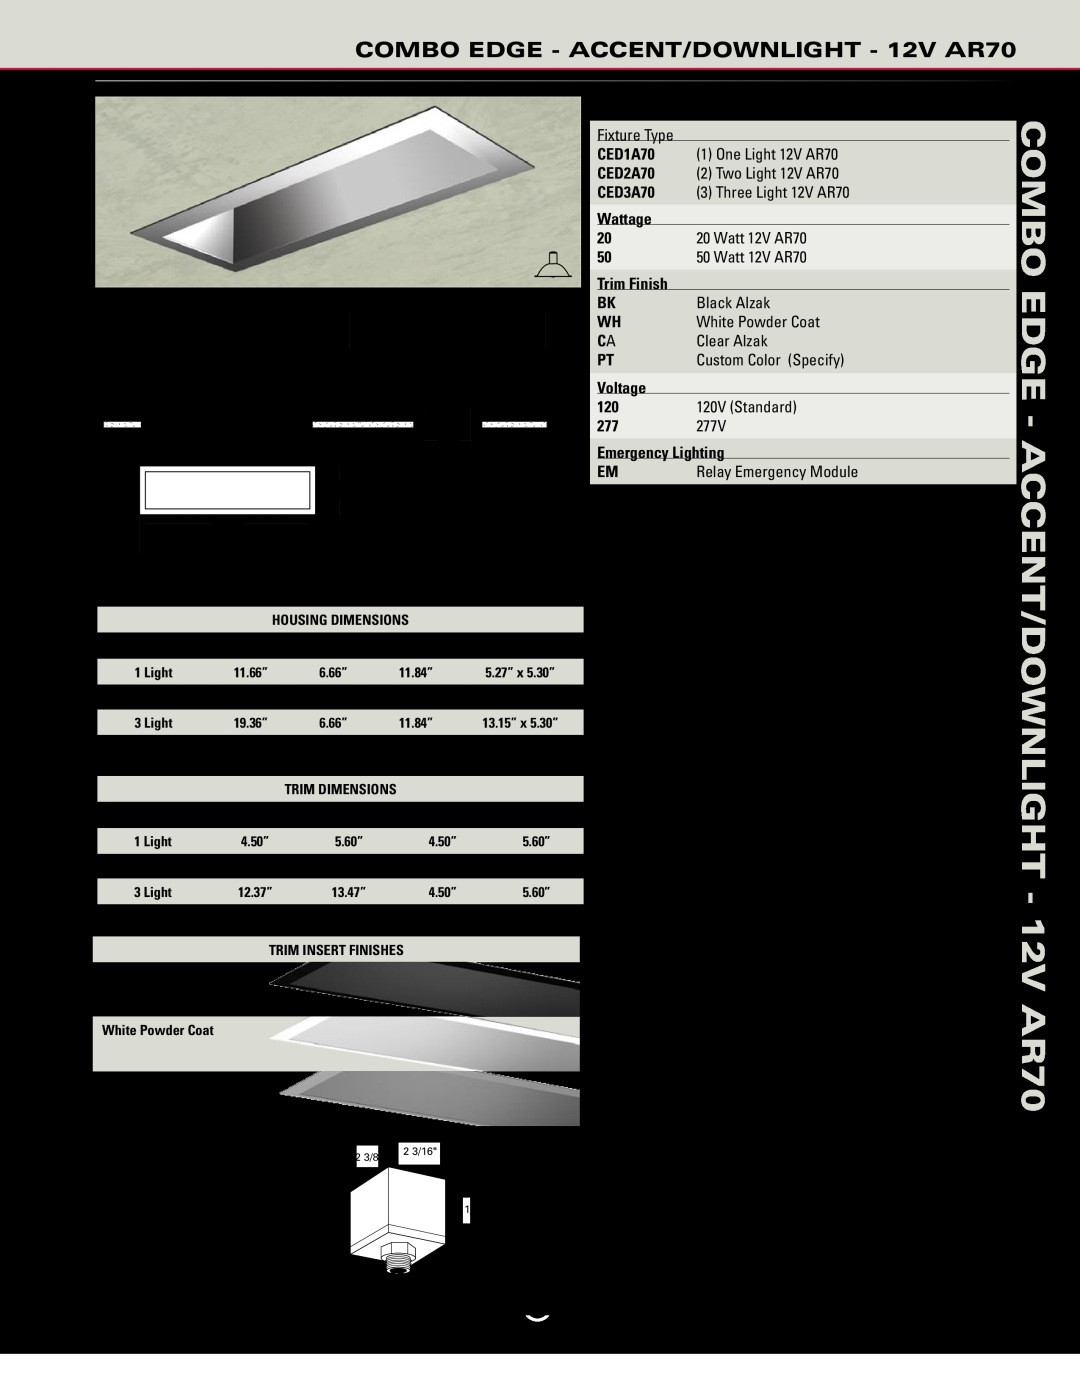 Cooper Lighting Combo Edge manual COMBO EDGE - ACCENT/DOWNLIGHT - 12V AR70, CED3A70-50-CA-120 